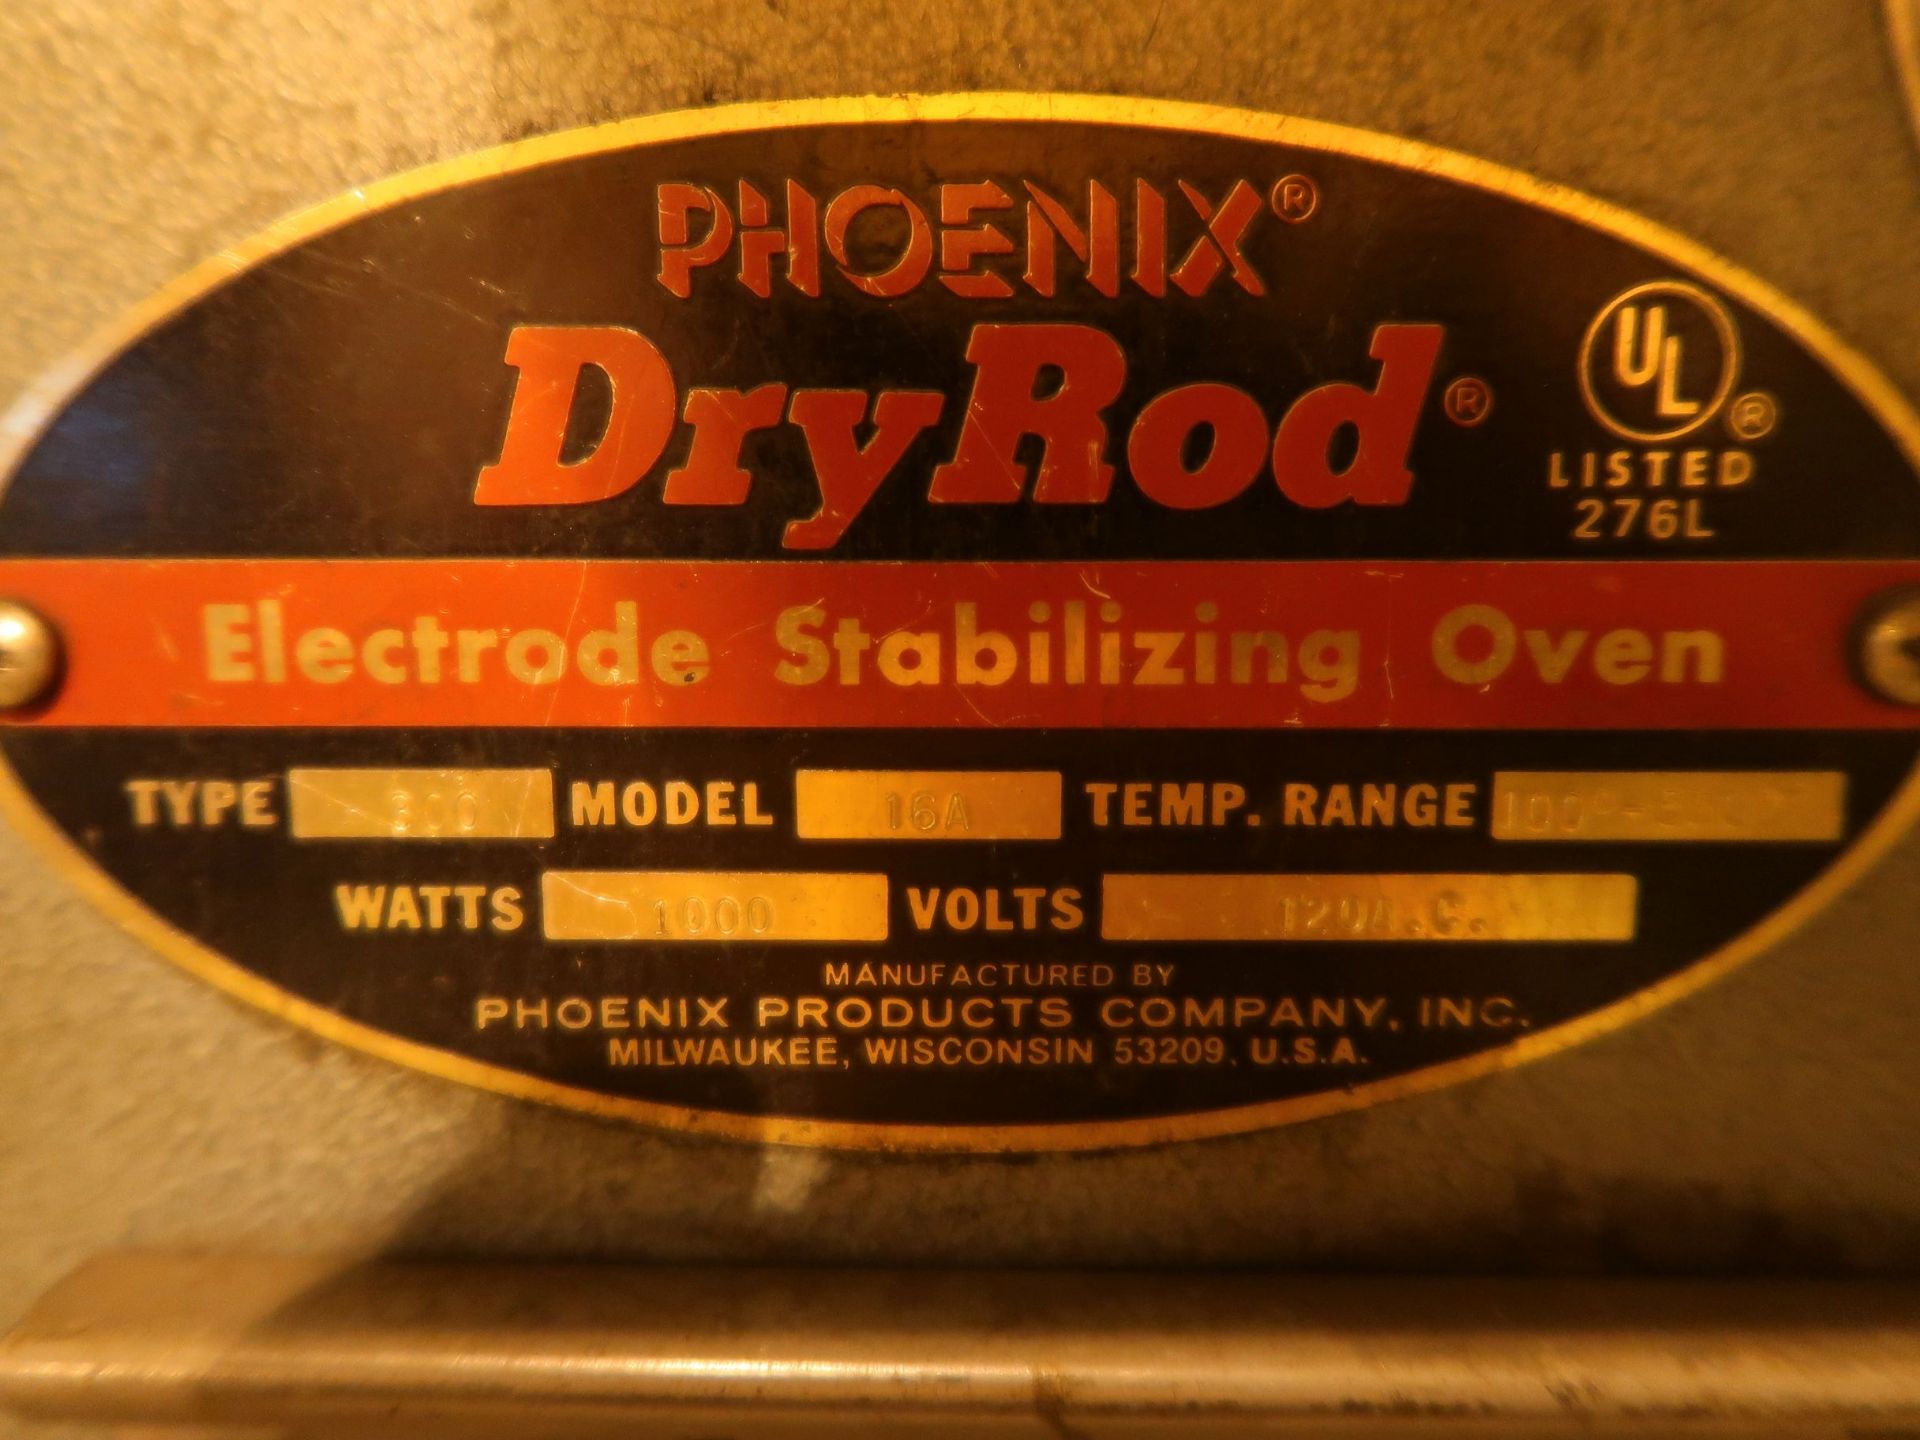 PHOENIX DRY ROD ELECTRODE STABLIZING OVEN - Image 4 of 4